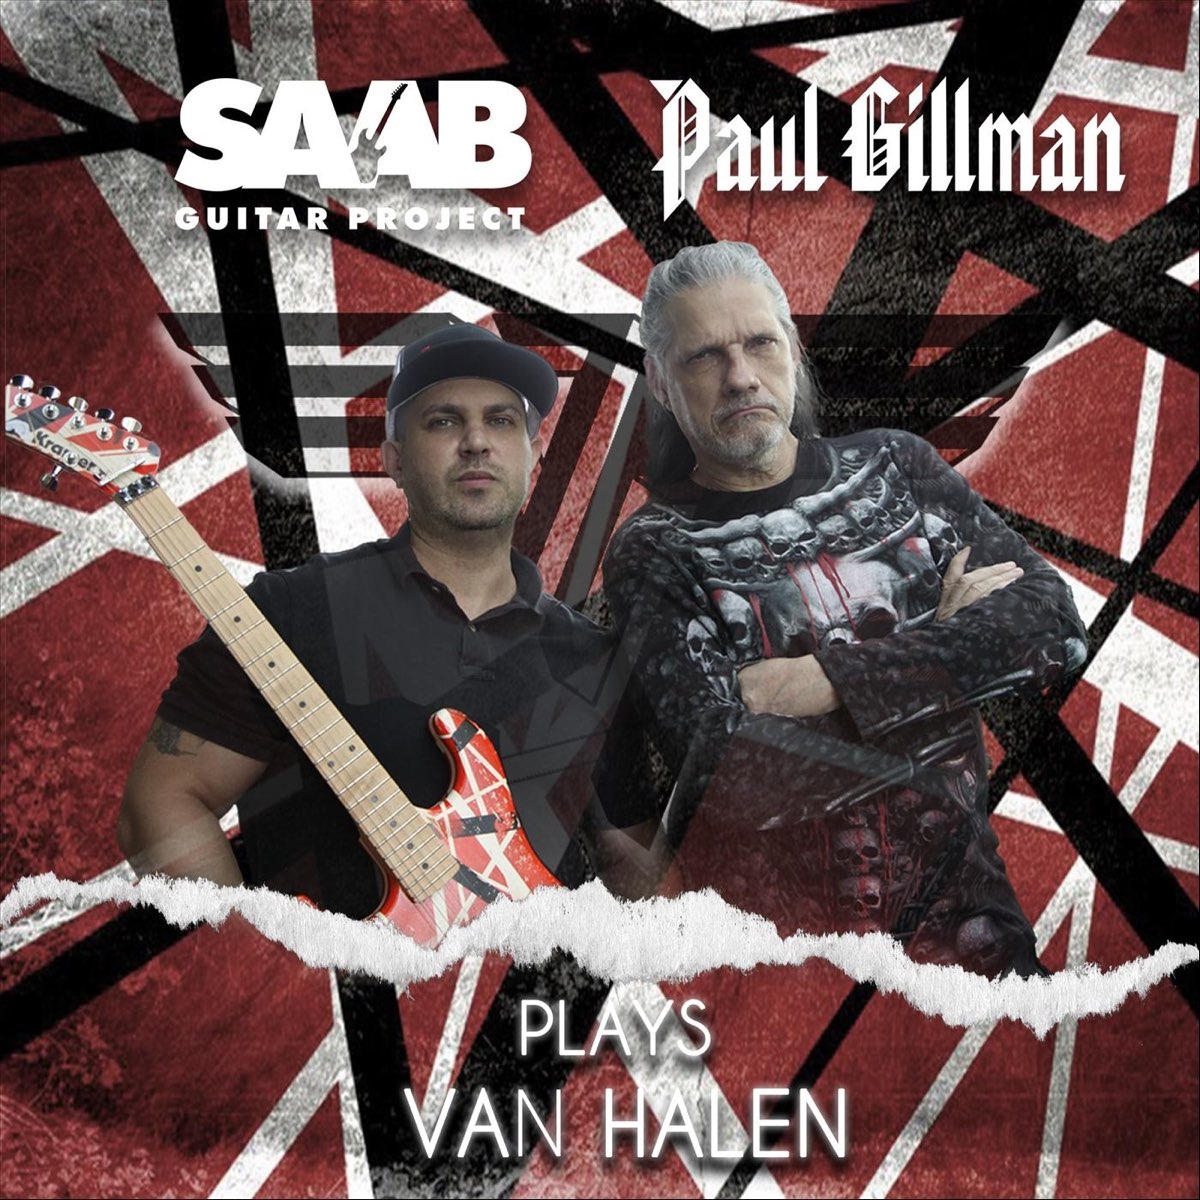 Saab Guitar Project Plays Van Halen Ft. Paul Gillman de Saab Guitar Project  en Apple Music